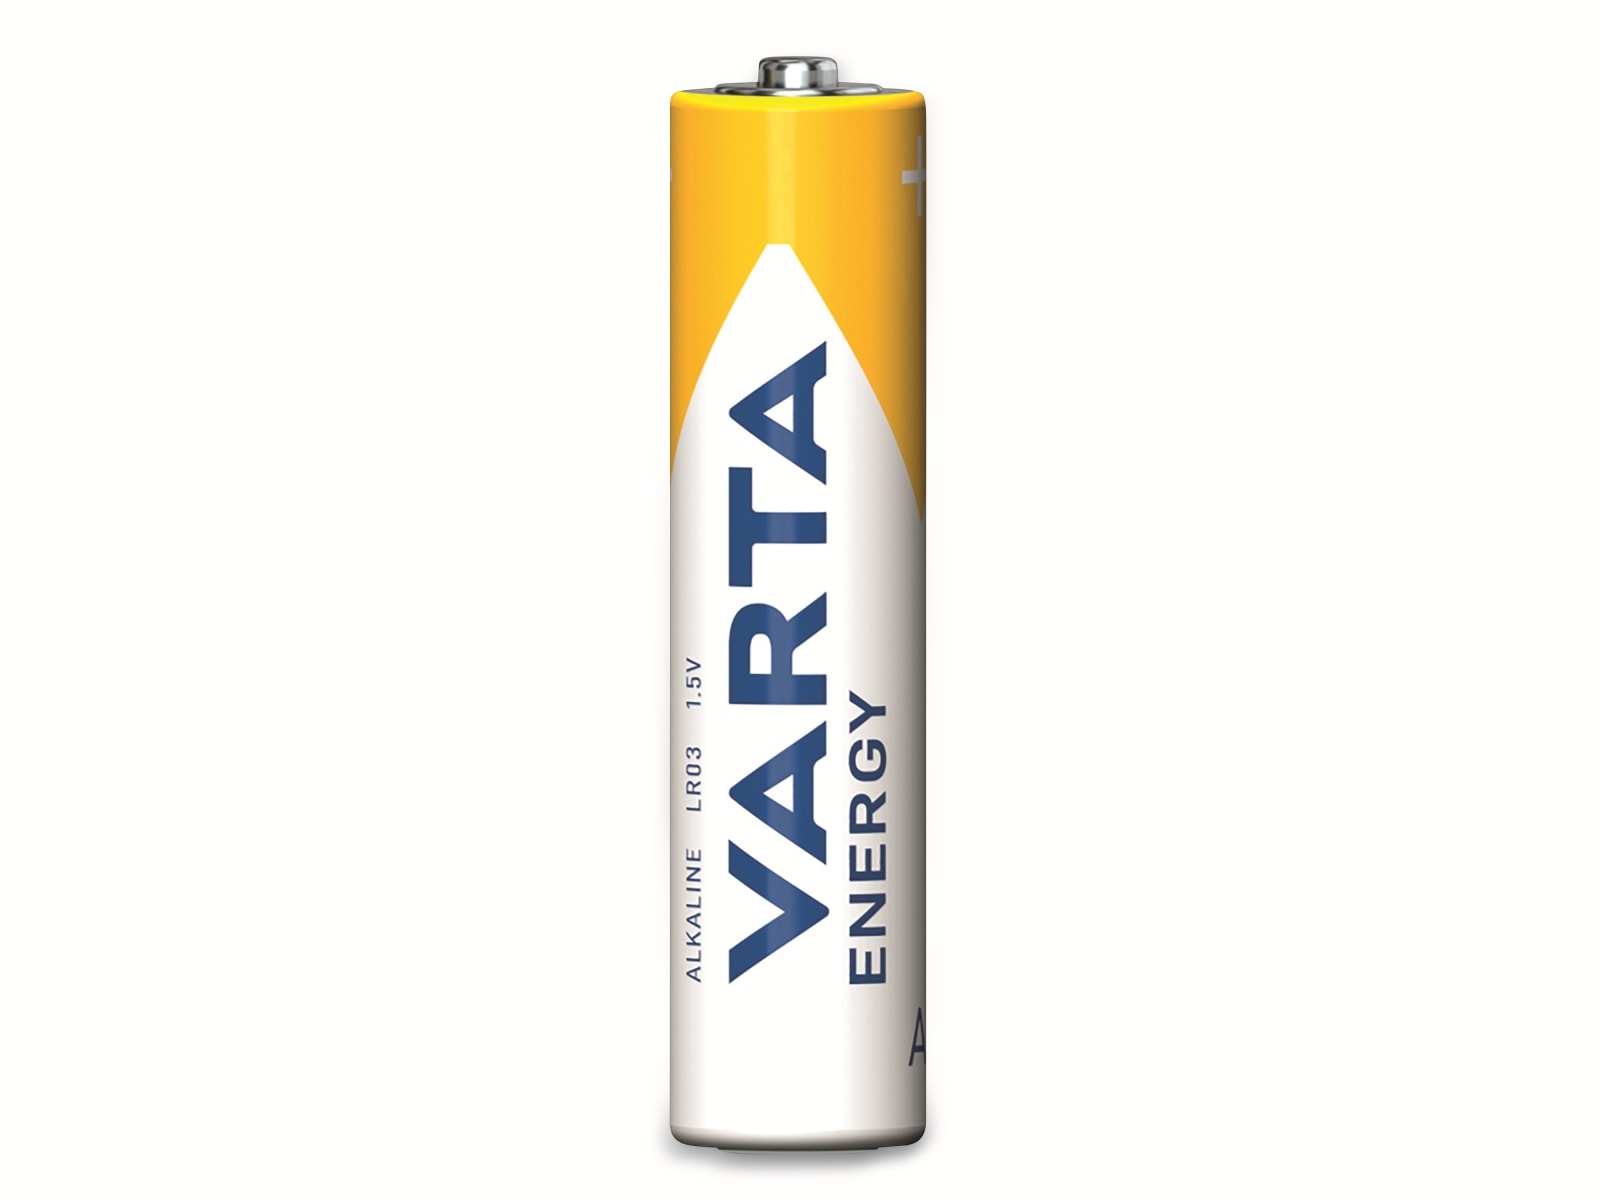 VARTA Batterie Alkaline, Micro, AAA, LR03, 1.5V, Energy, 30 Stück